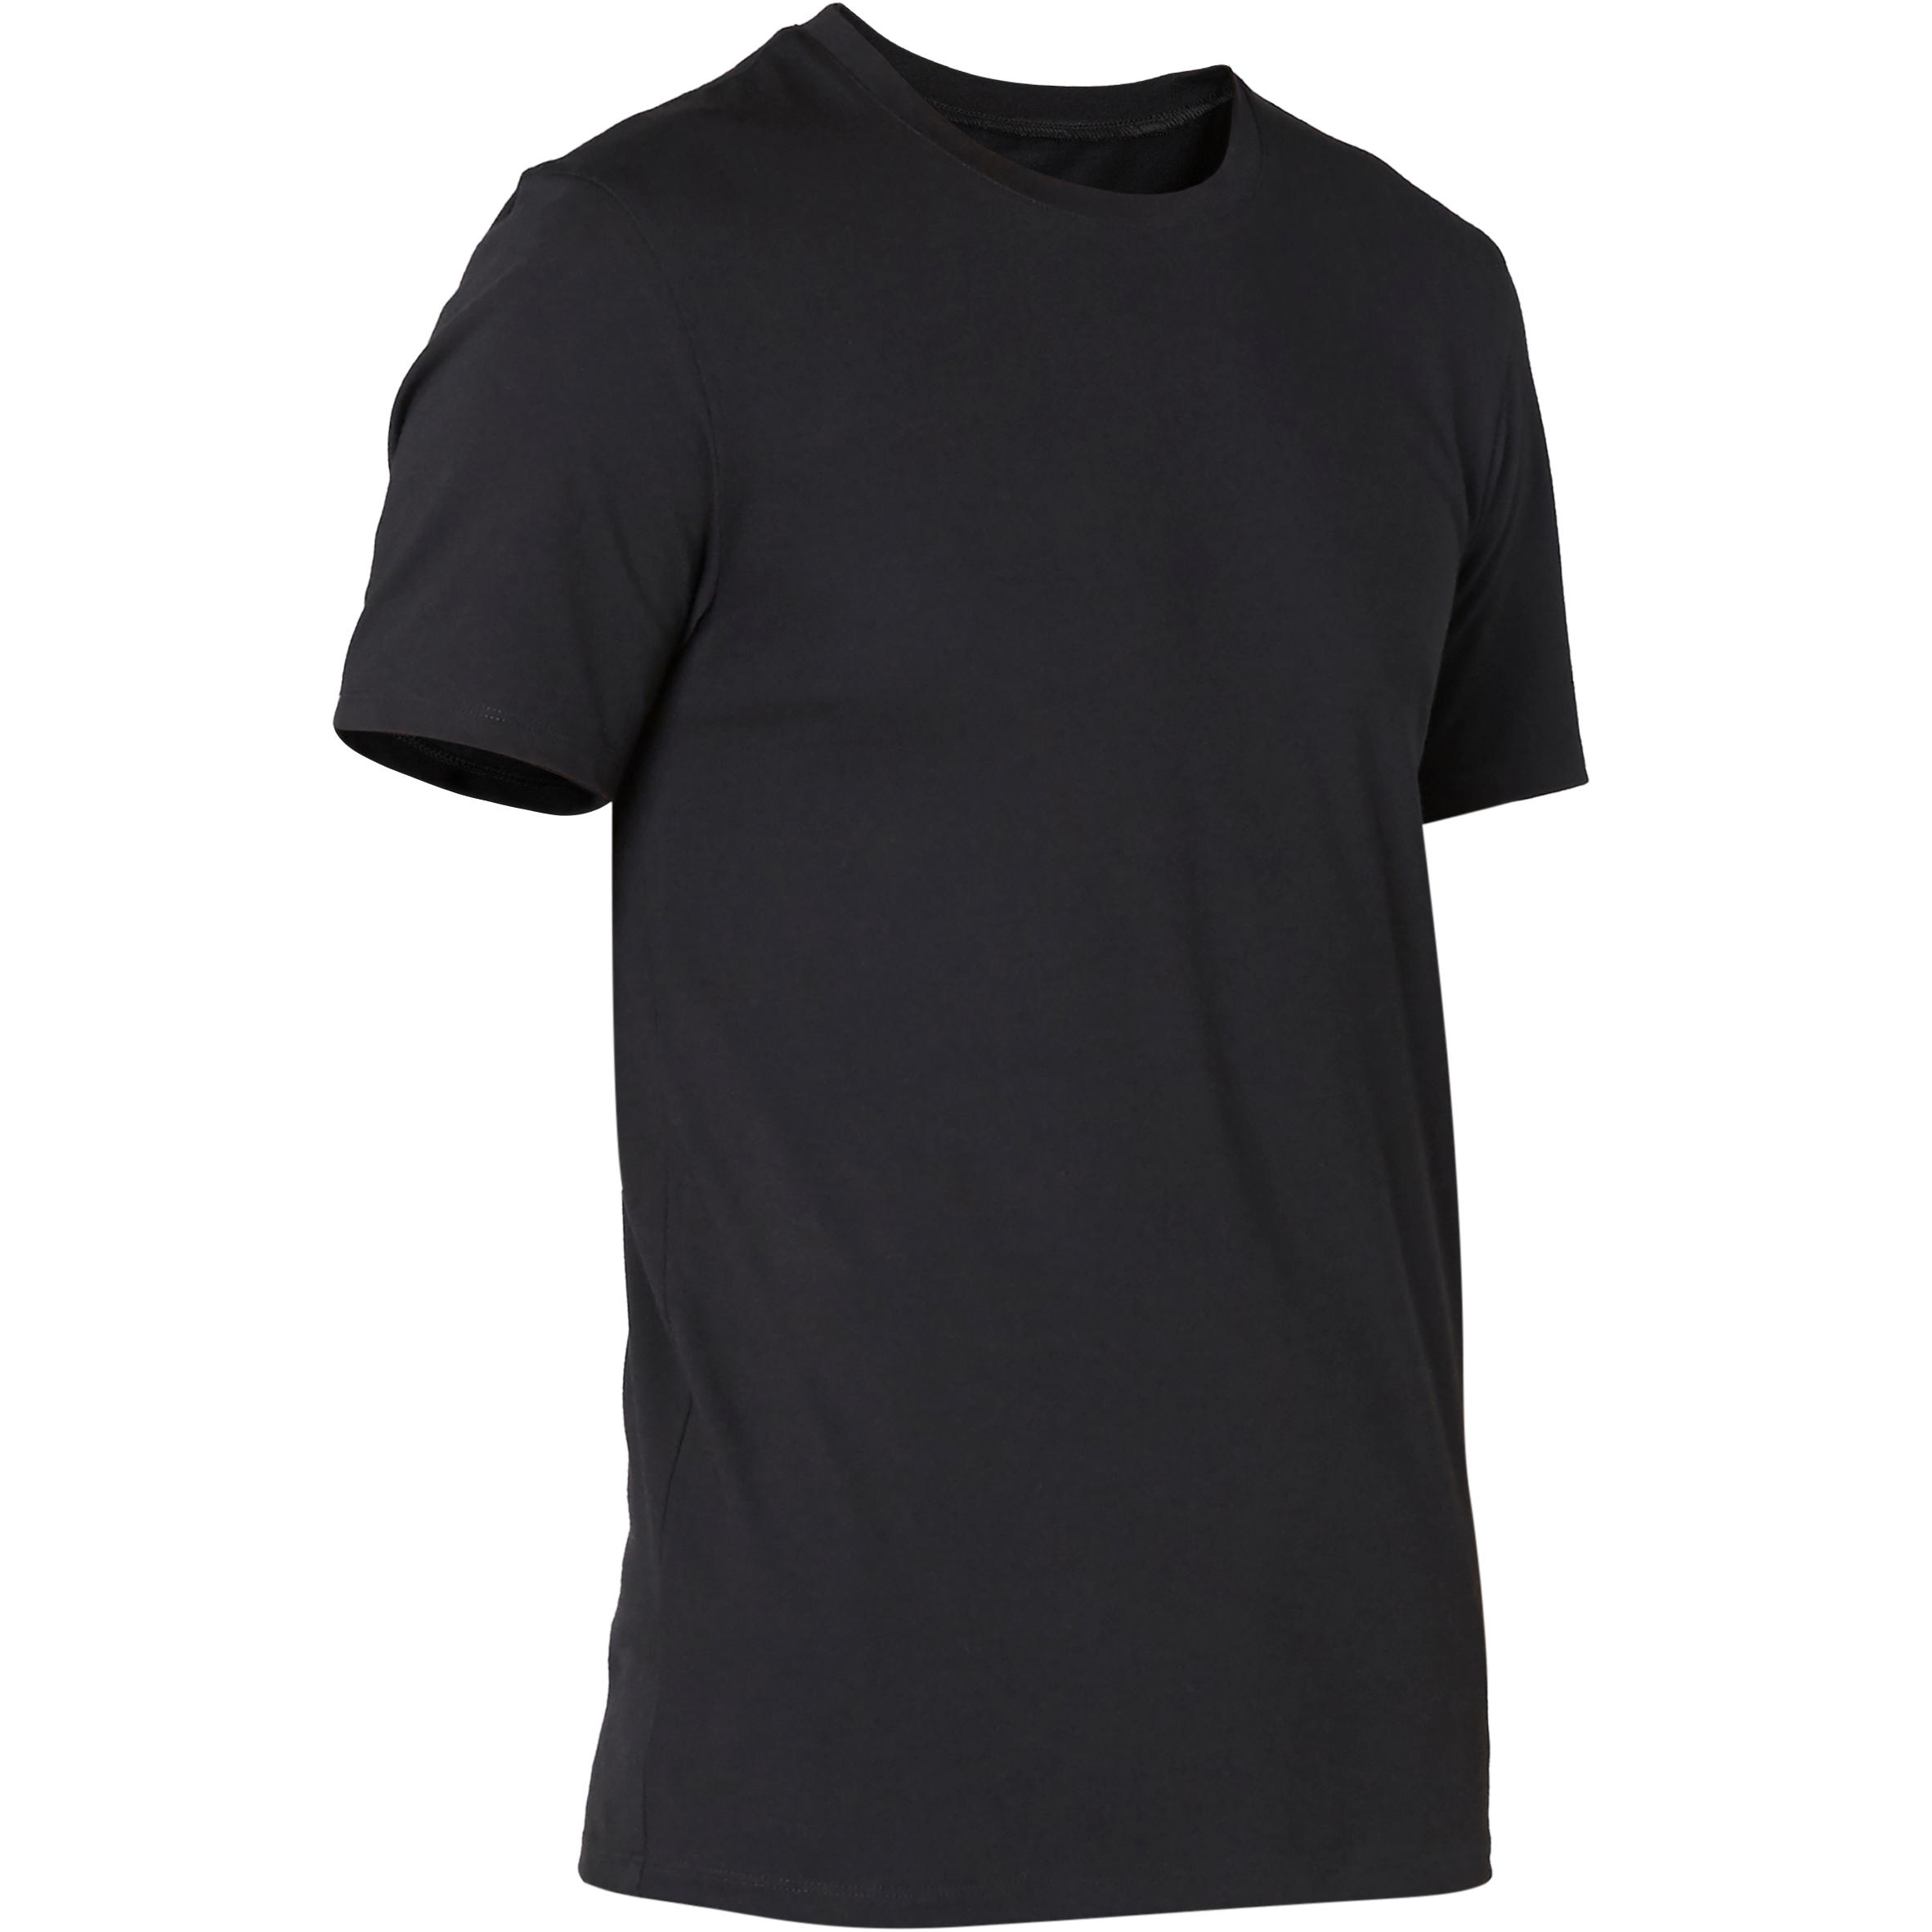 Men's Slim-Fit Fitness T-Shirt 500 - Black 15/19